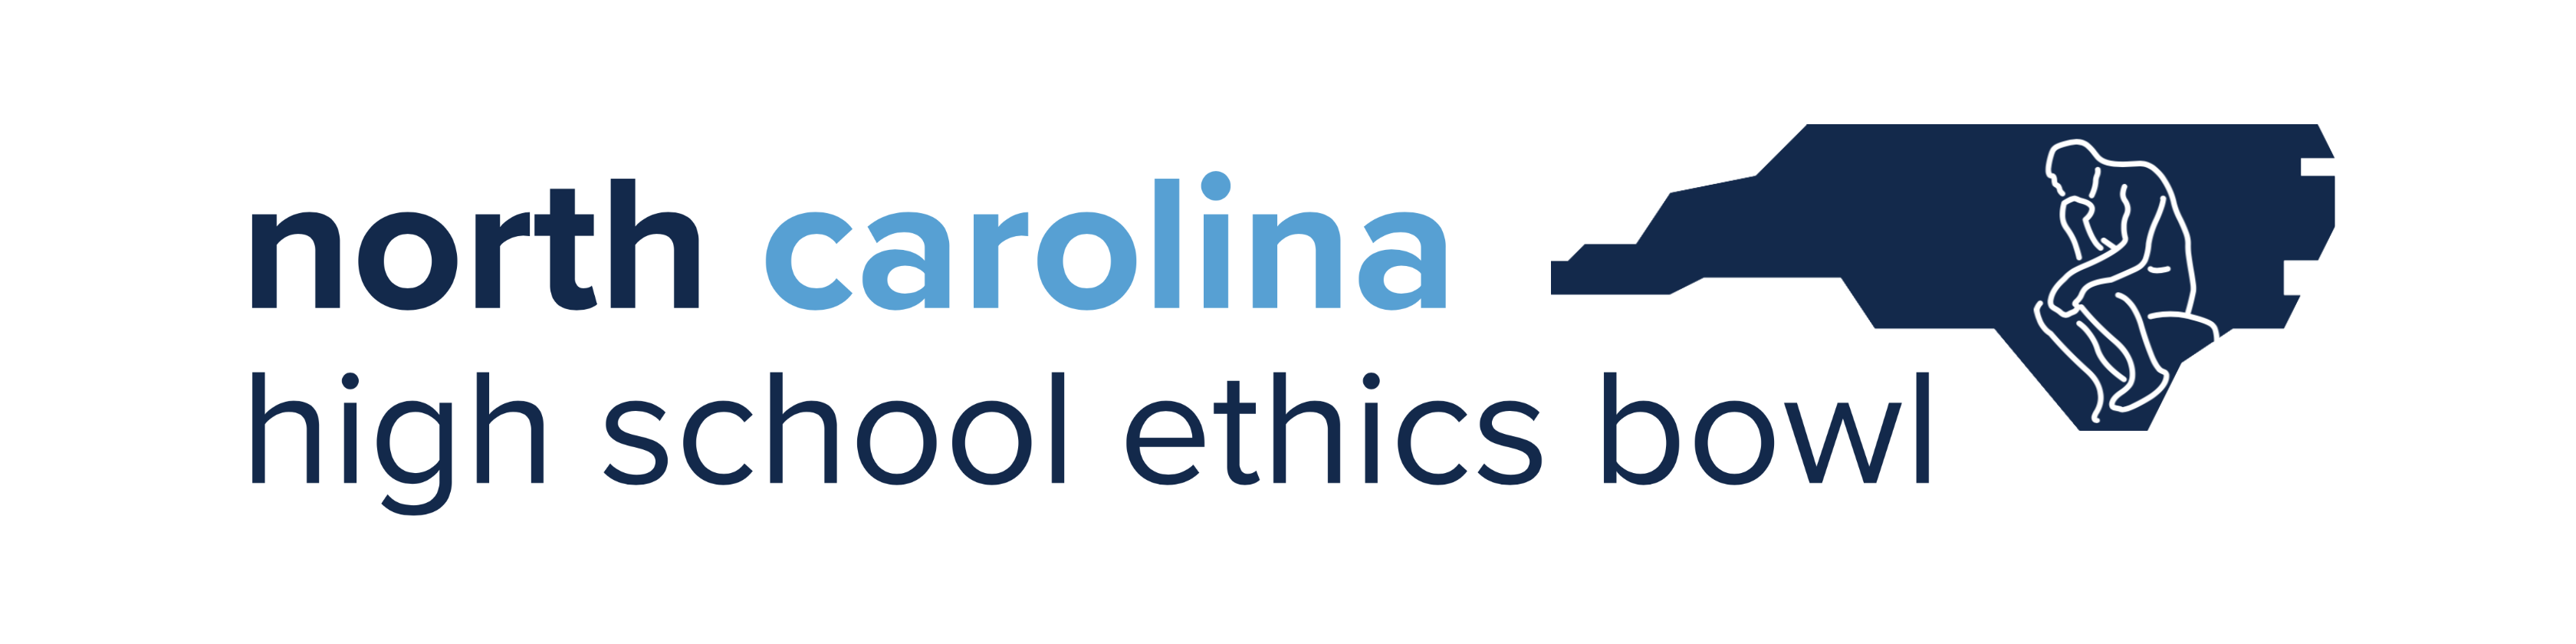 case study for ethics bowl